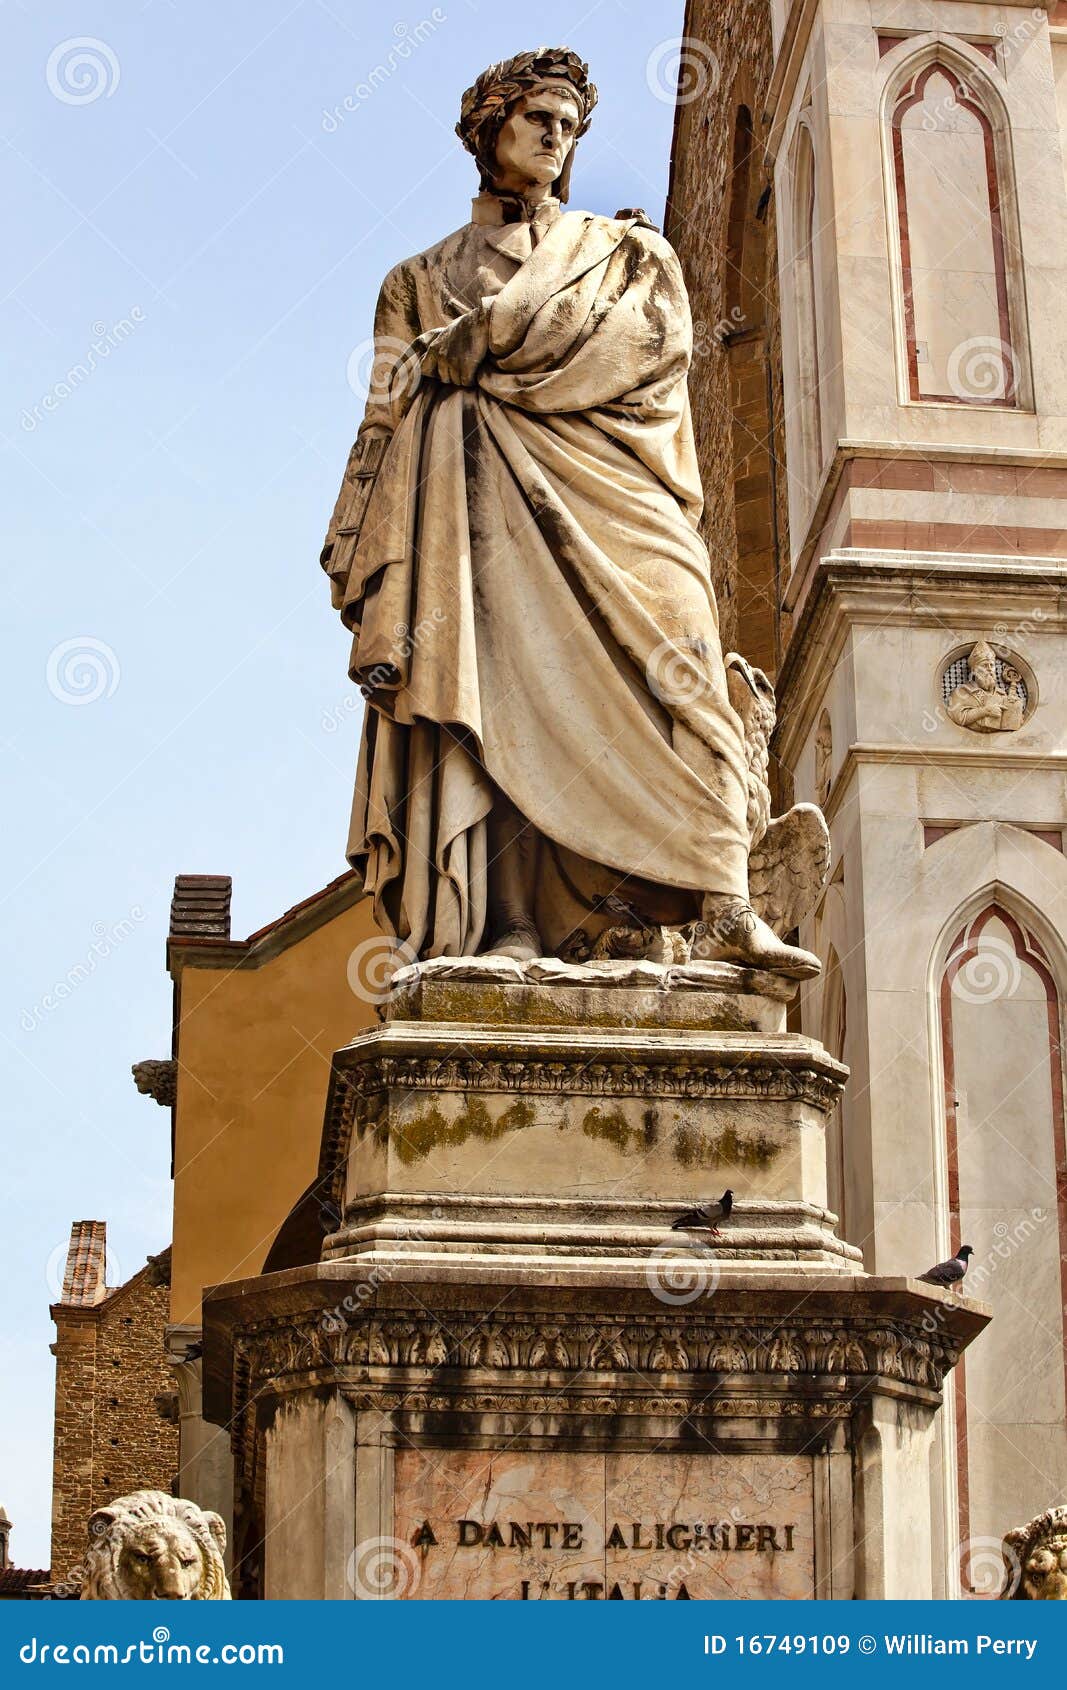 dante statue basilica santa croce florence italy